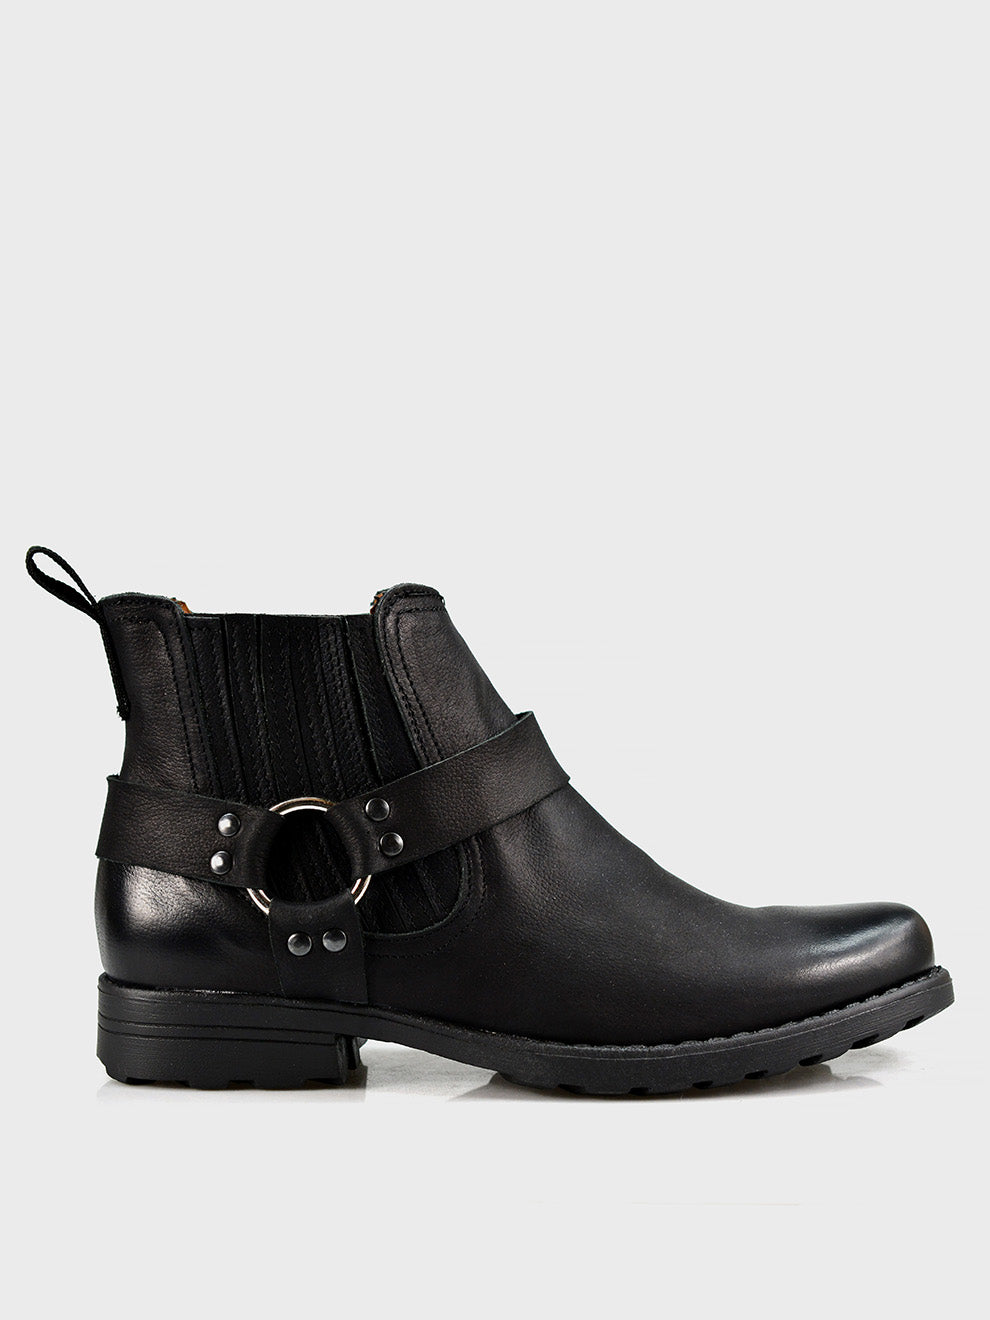 Cherilyn Black Leather Cowboy Boots KACHOROVSKA 38 / Black